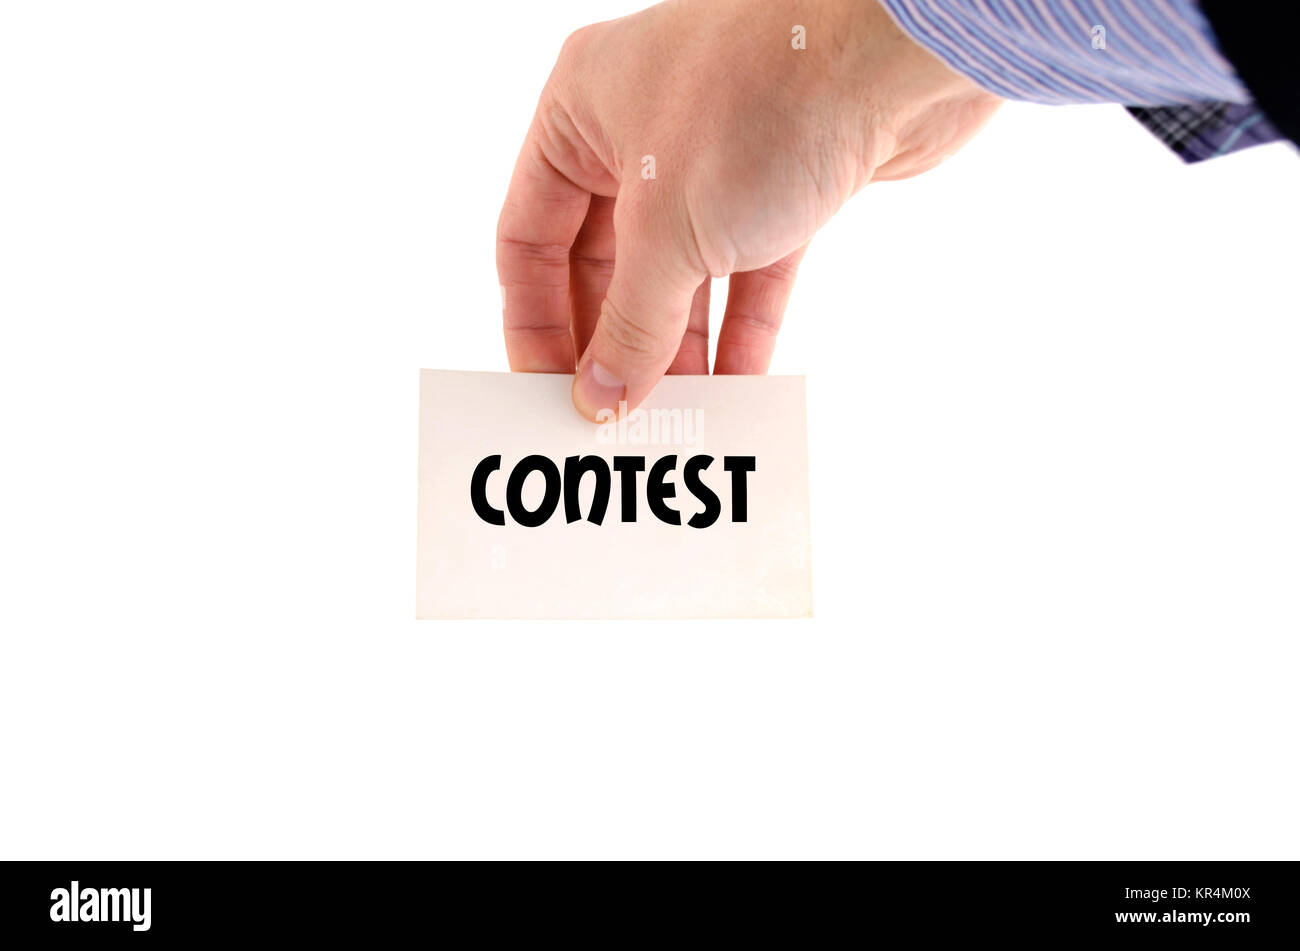 Contest text concept Stock Photo